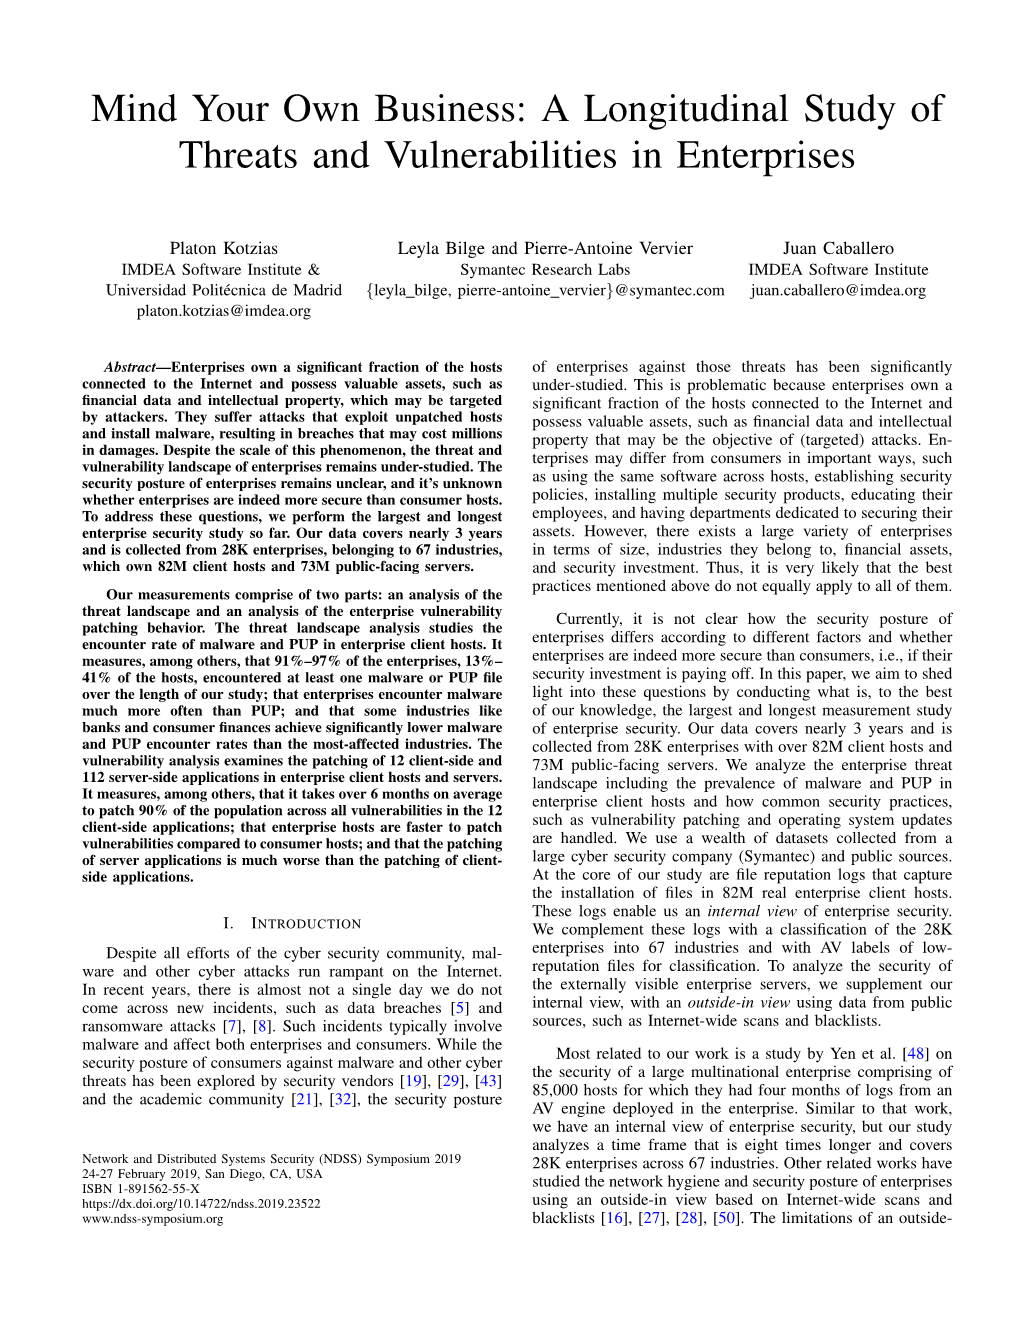 A Longitudinal Study of Threats and Vulnerabilities in Enterprises